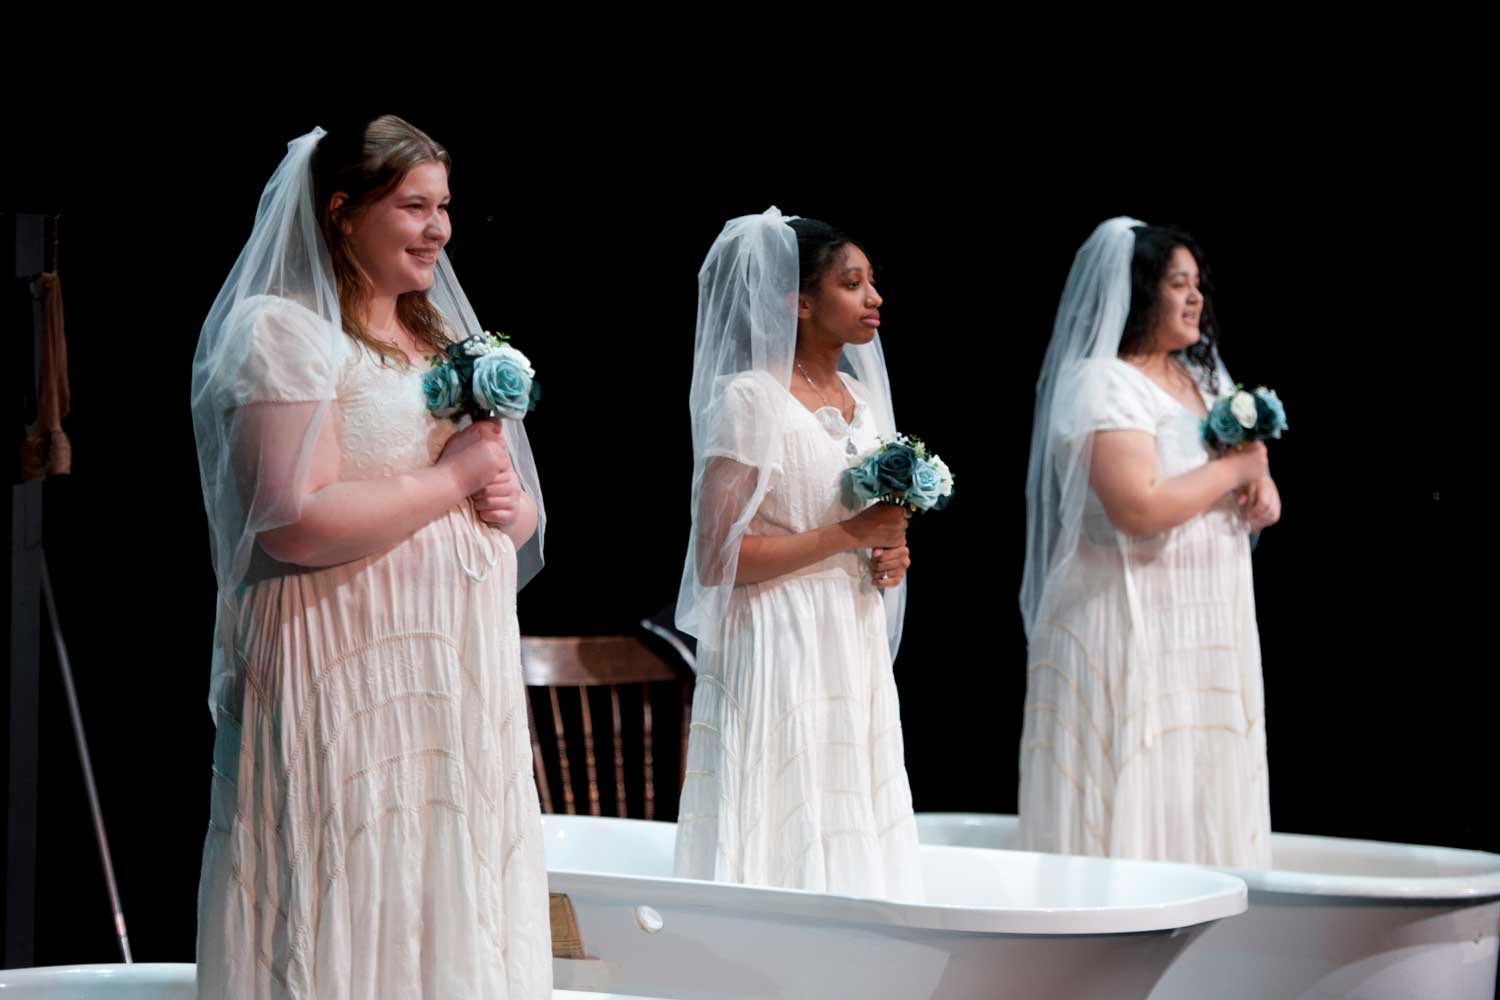 Three girls wearing wedding dreses standing in bathtubs